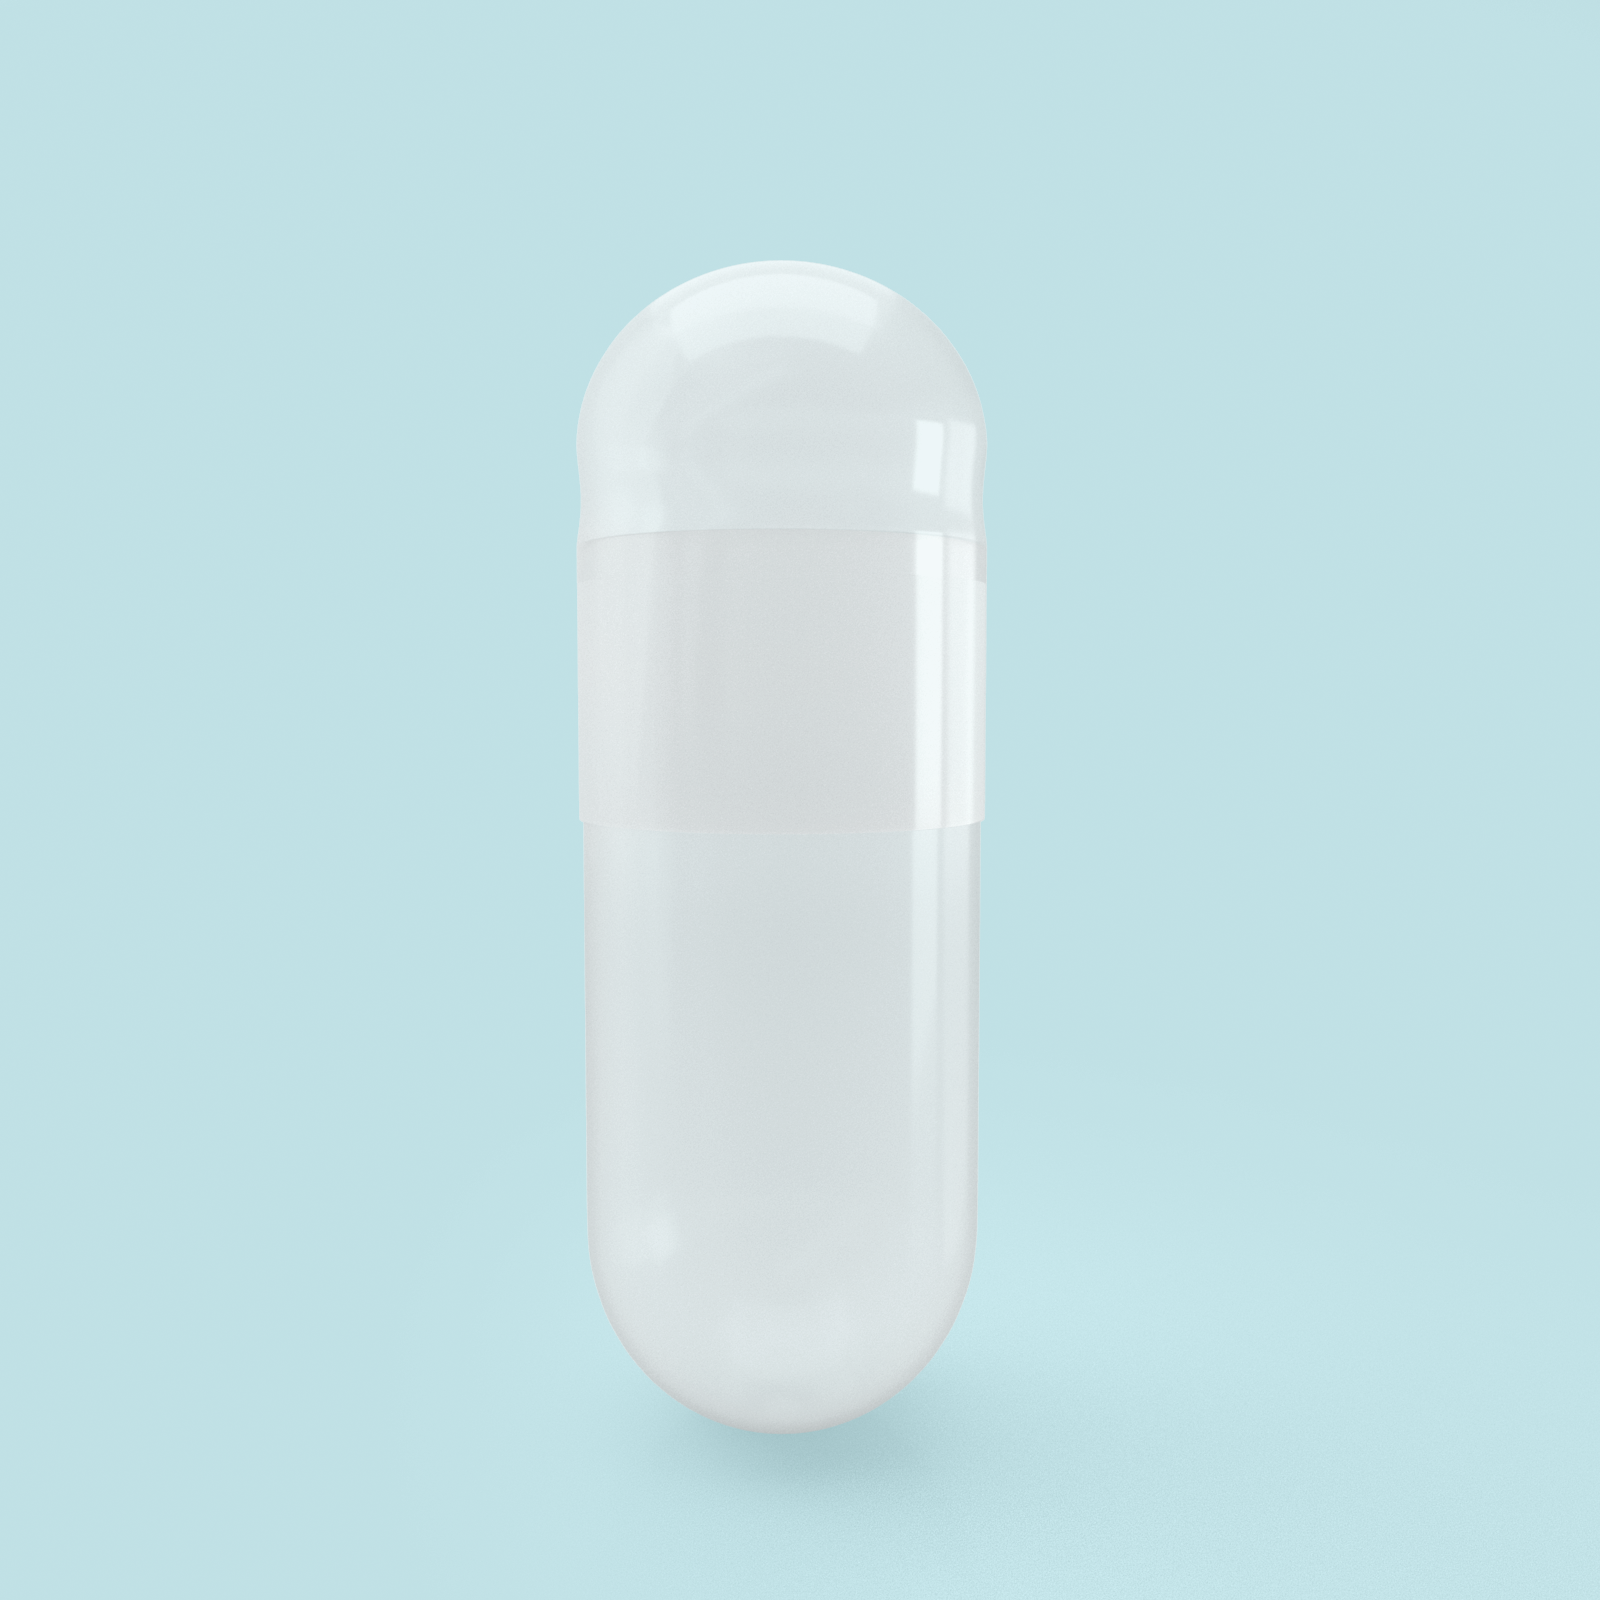 Titanium Dioxide (TiO2) Free - Colored Empty Gelatin Capsules Size 0 (Box of 100,000) - White